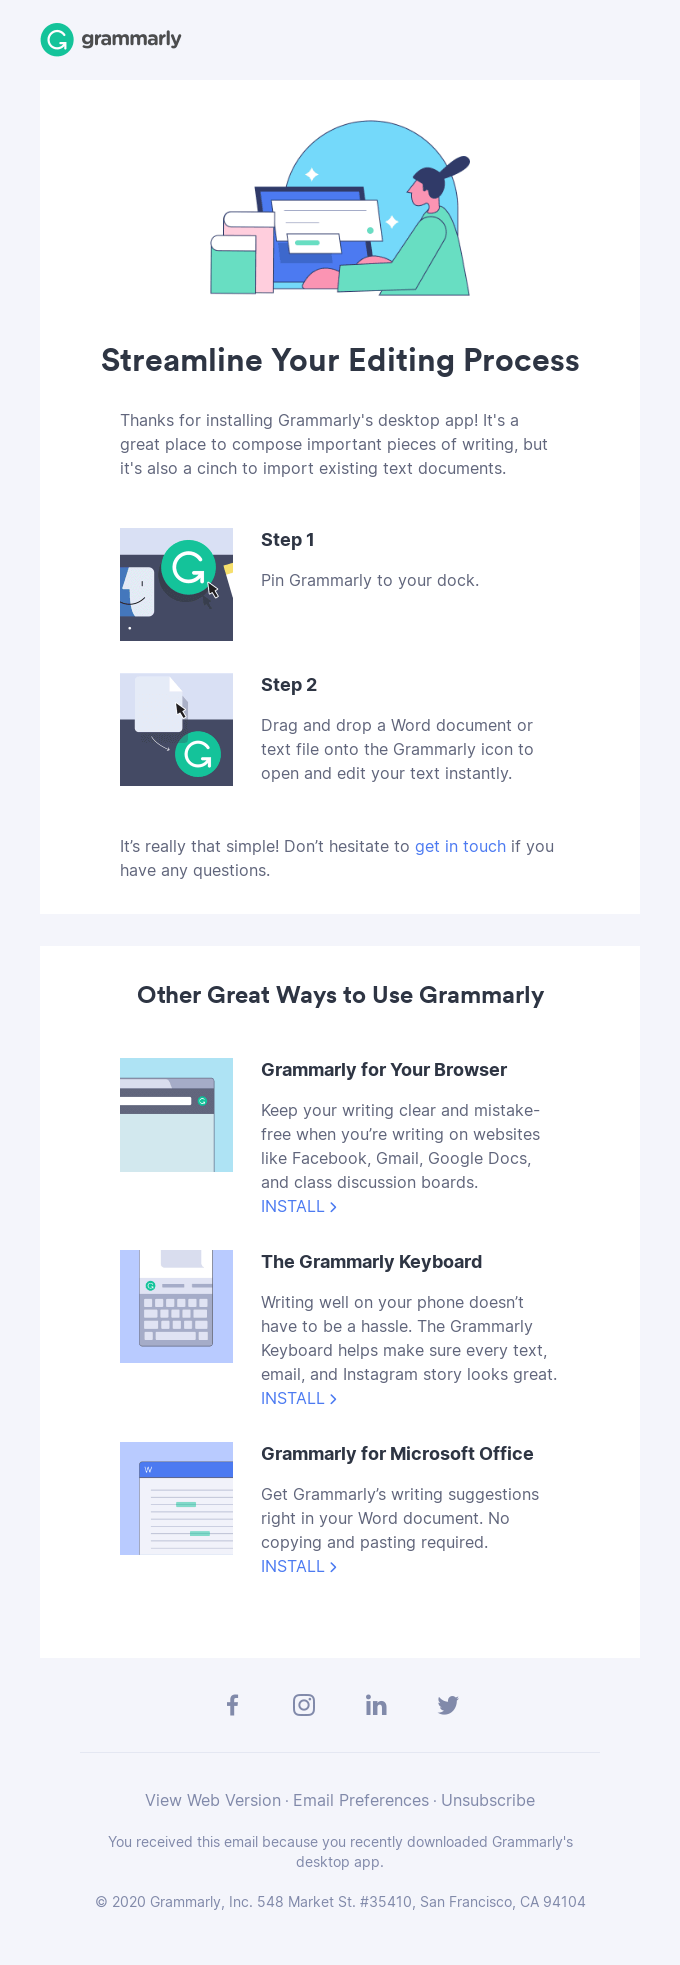 Pro tip for using Grammarly's desktop app